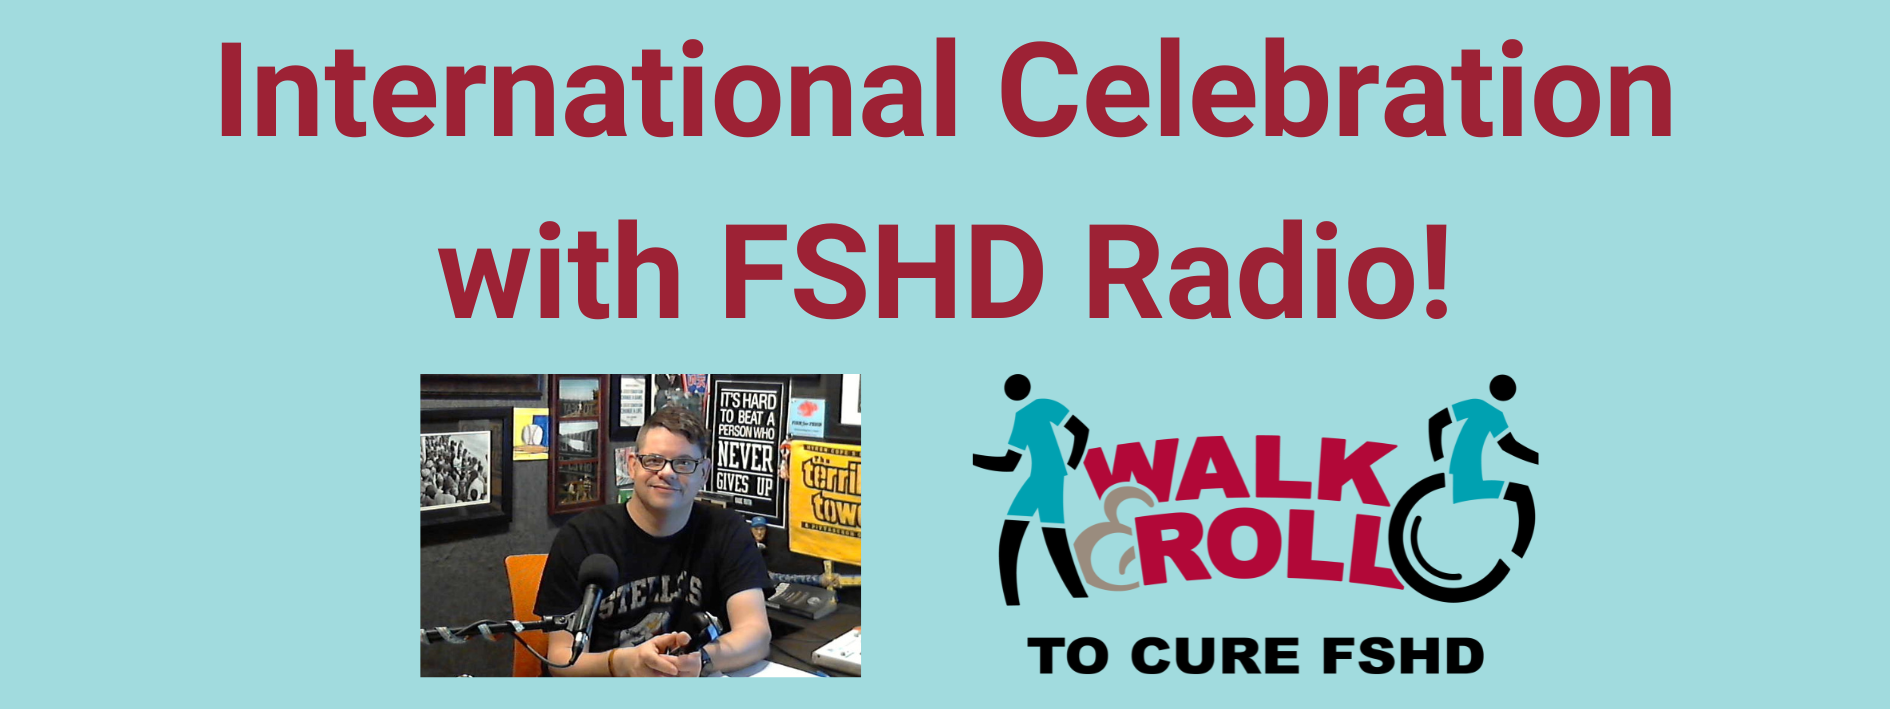 International Celebration with FSHD Radio